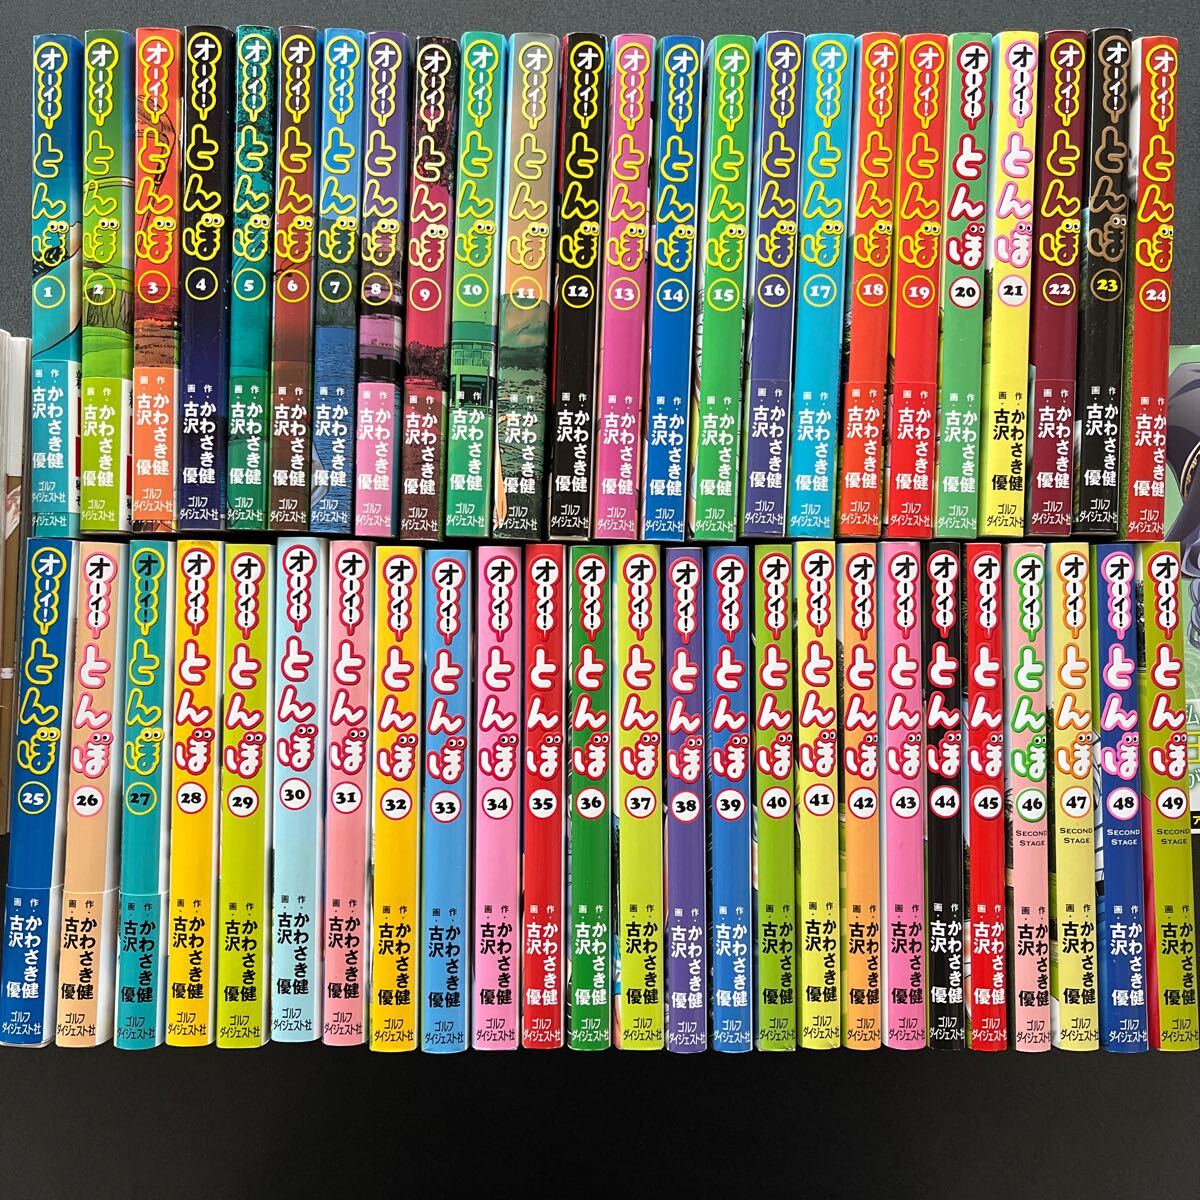 o-i... all 49 volume 